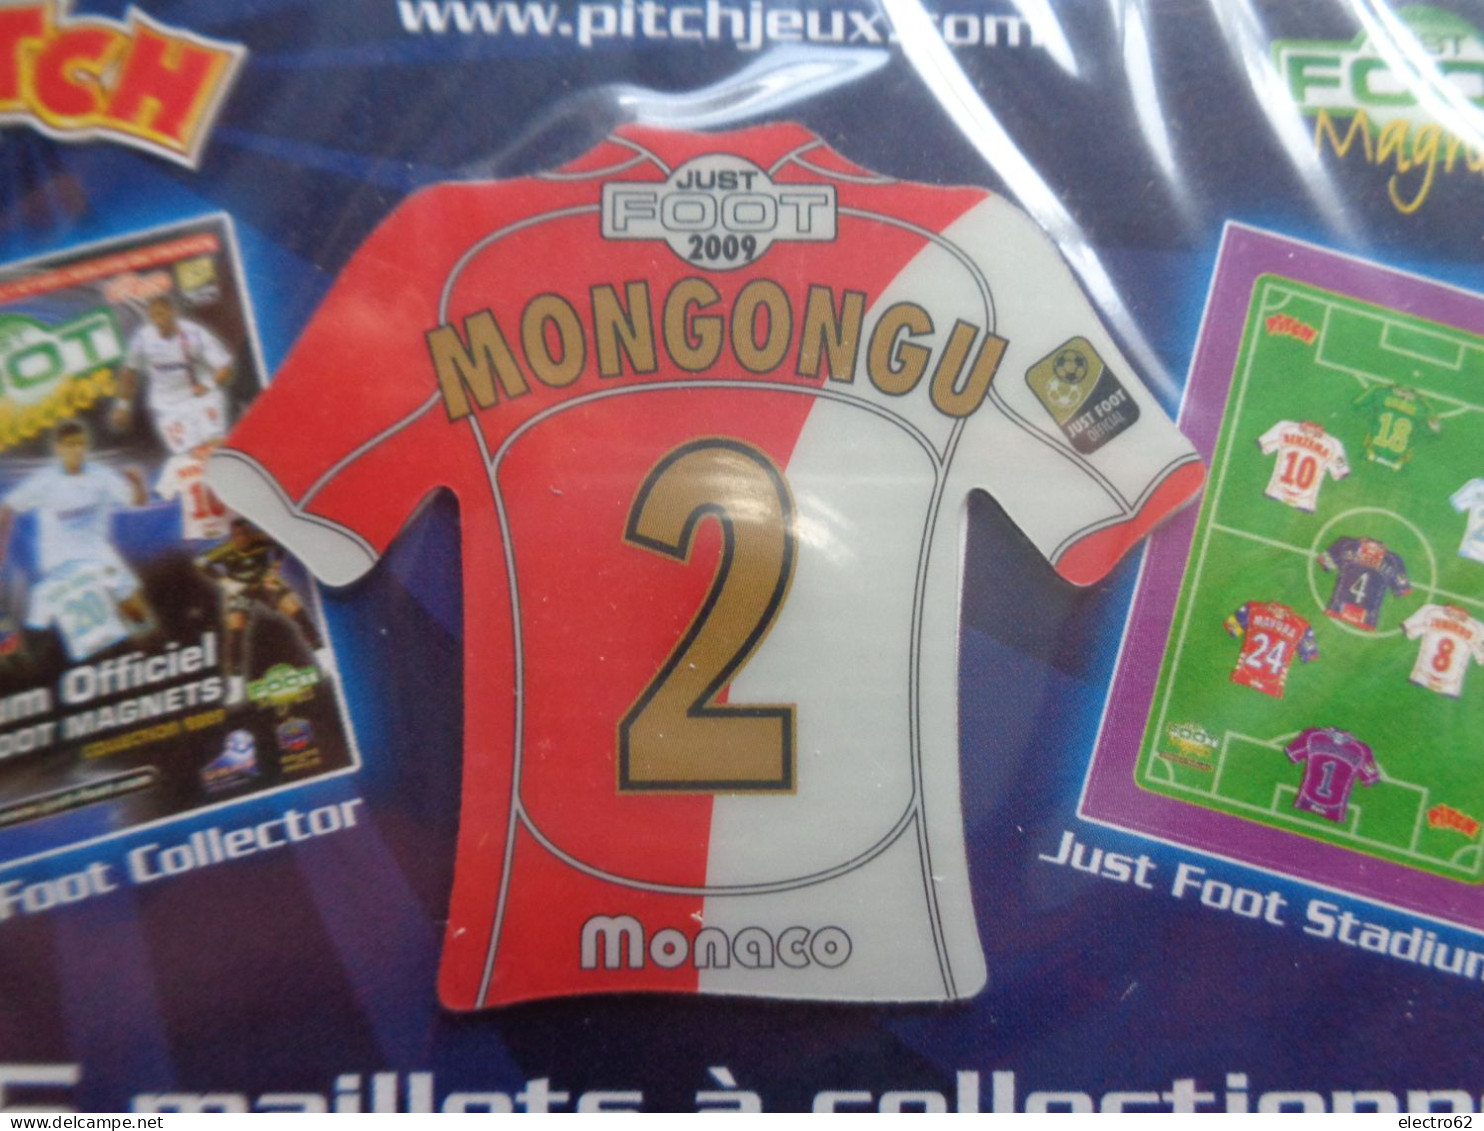 Magnet Football Pasquier Pitch Monaco Mongongu Foot Calcio Soccer Fußball Voetbal Fotball Fútbol Futebol - Sports